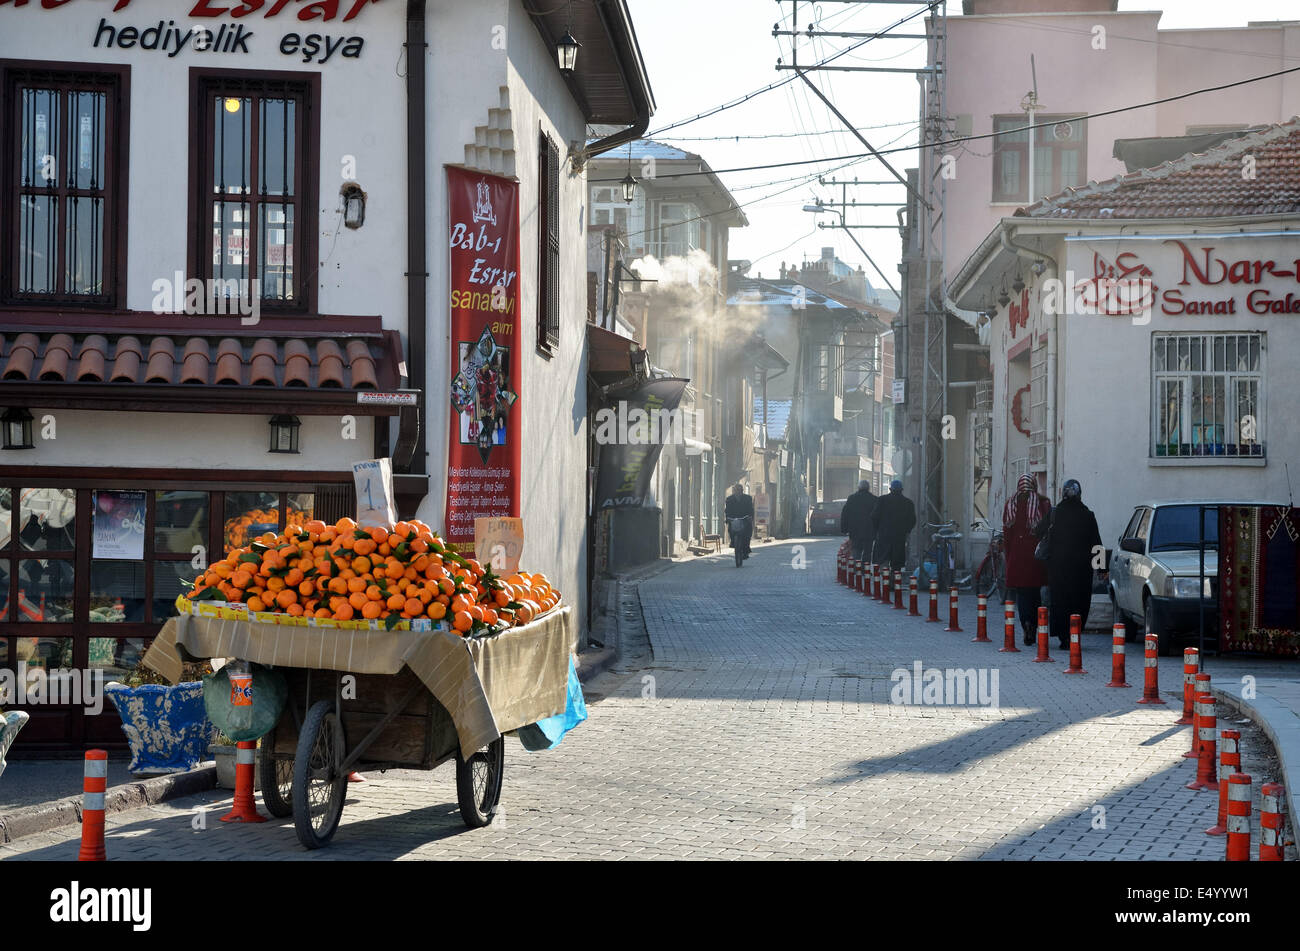 City street konya turkey hi-res stock photography and images - Alamy